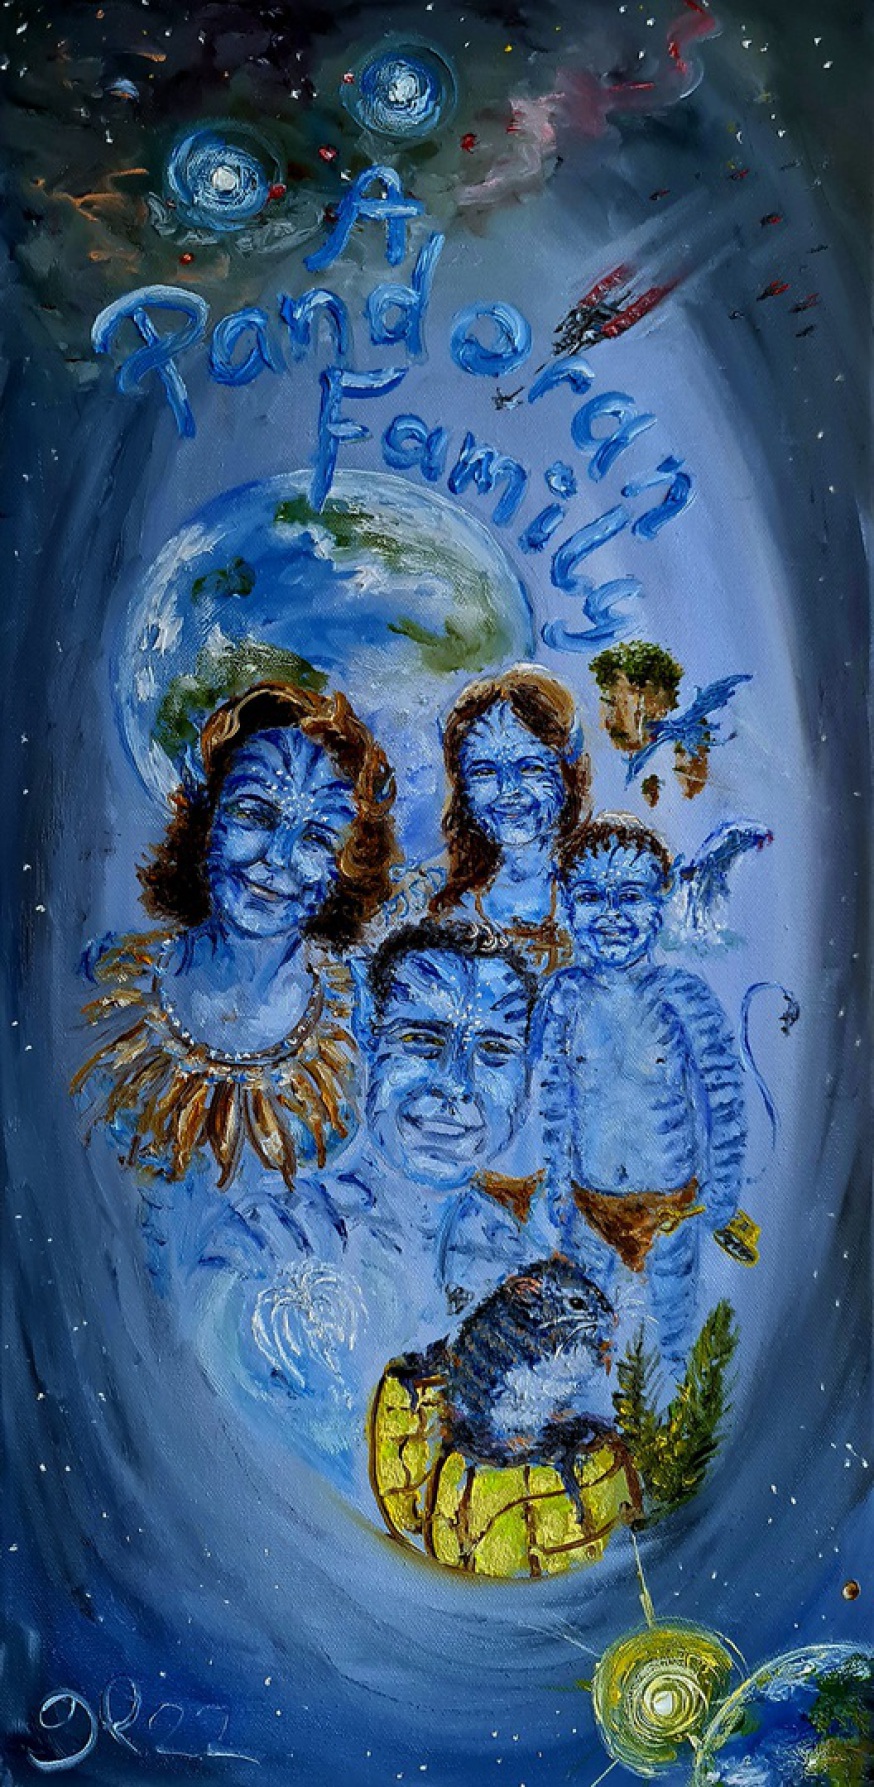 We are Avatars! Avatar, James Cameron, Pandora, The Way of Water